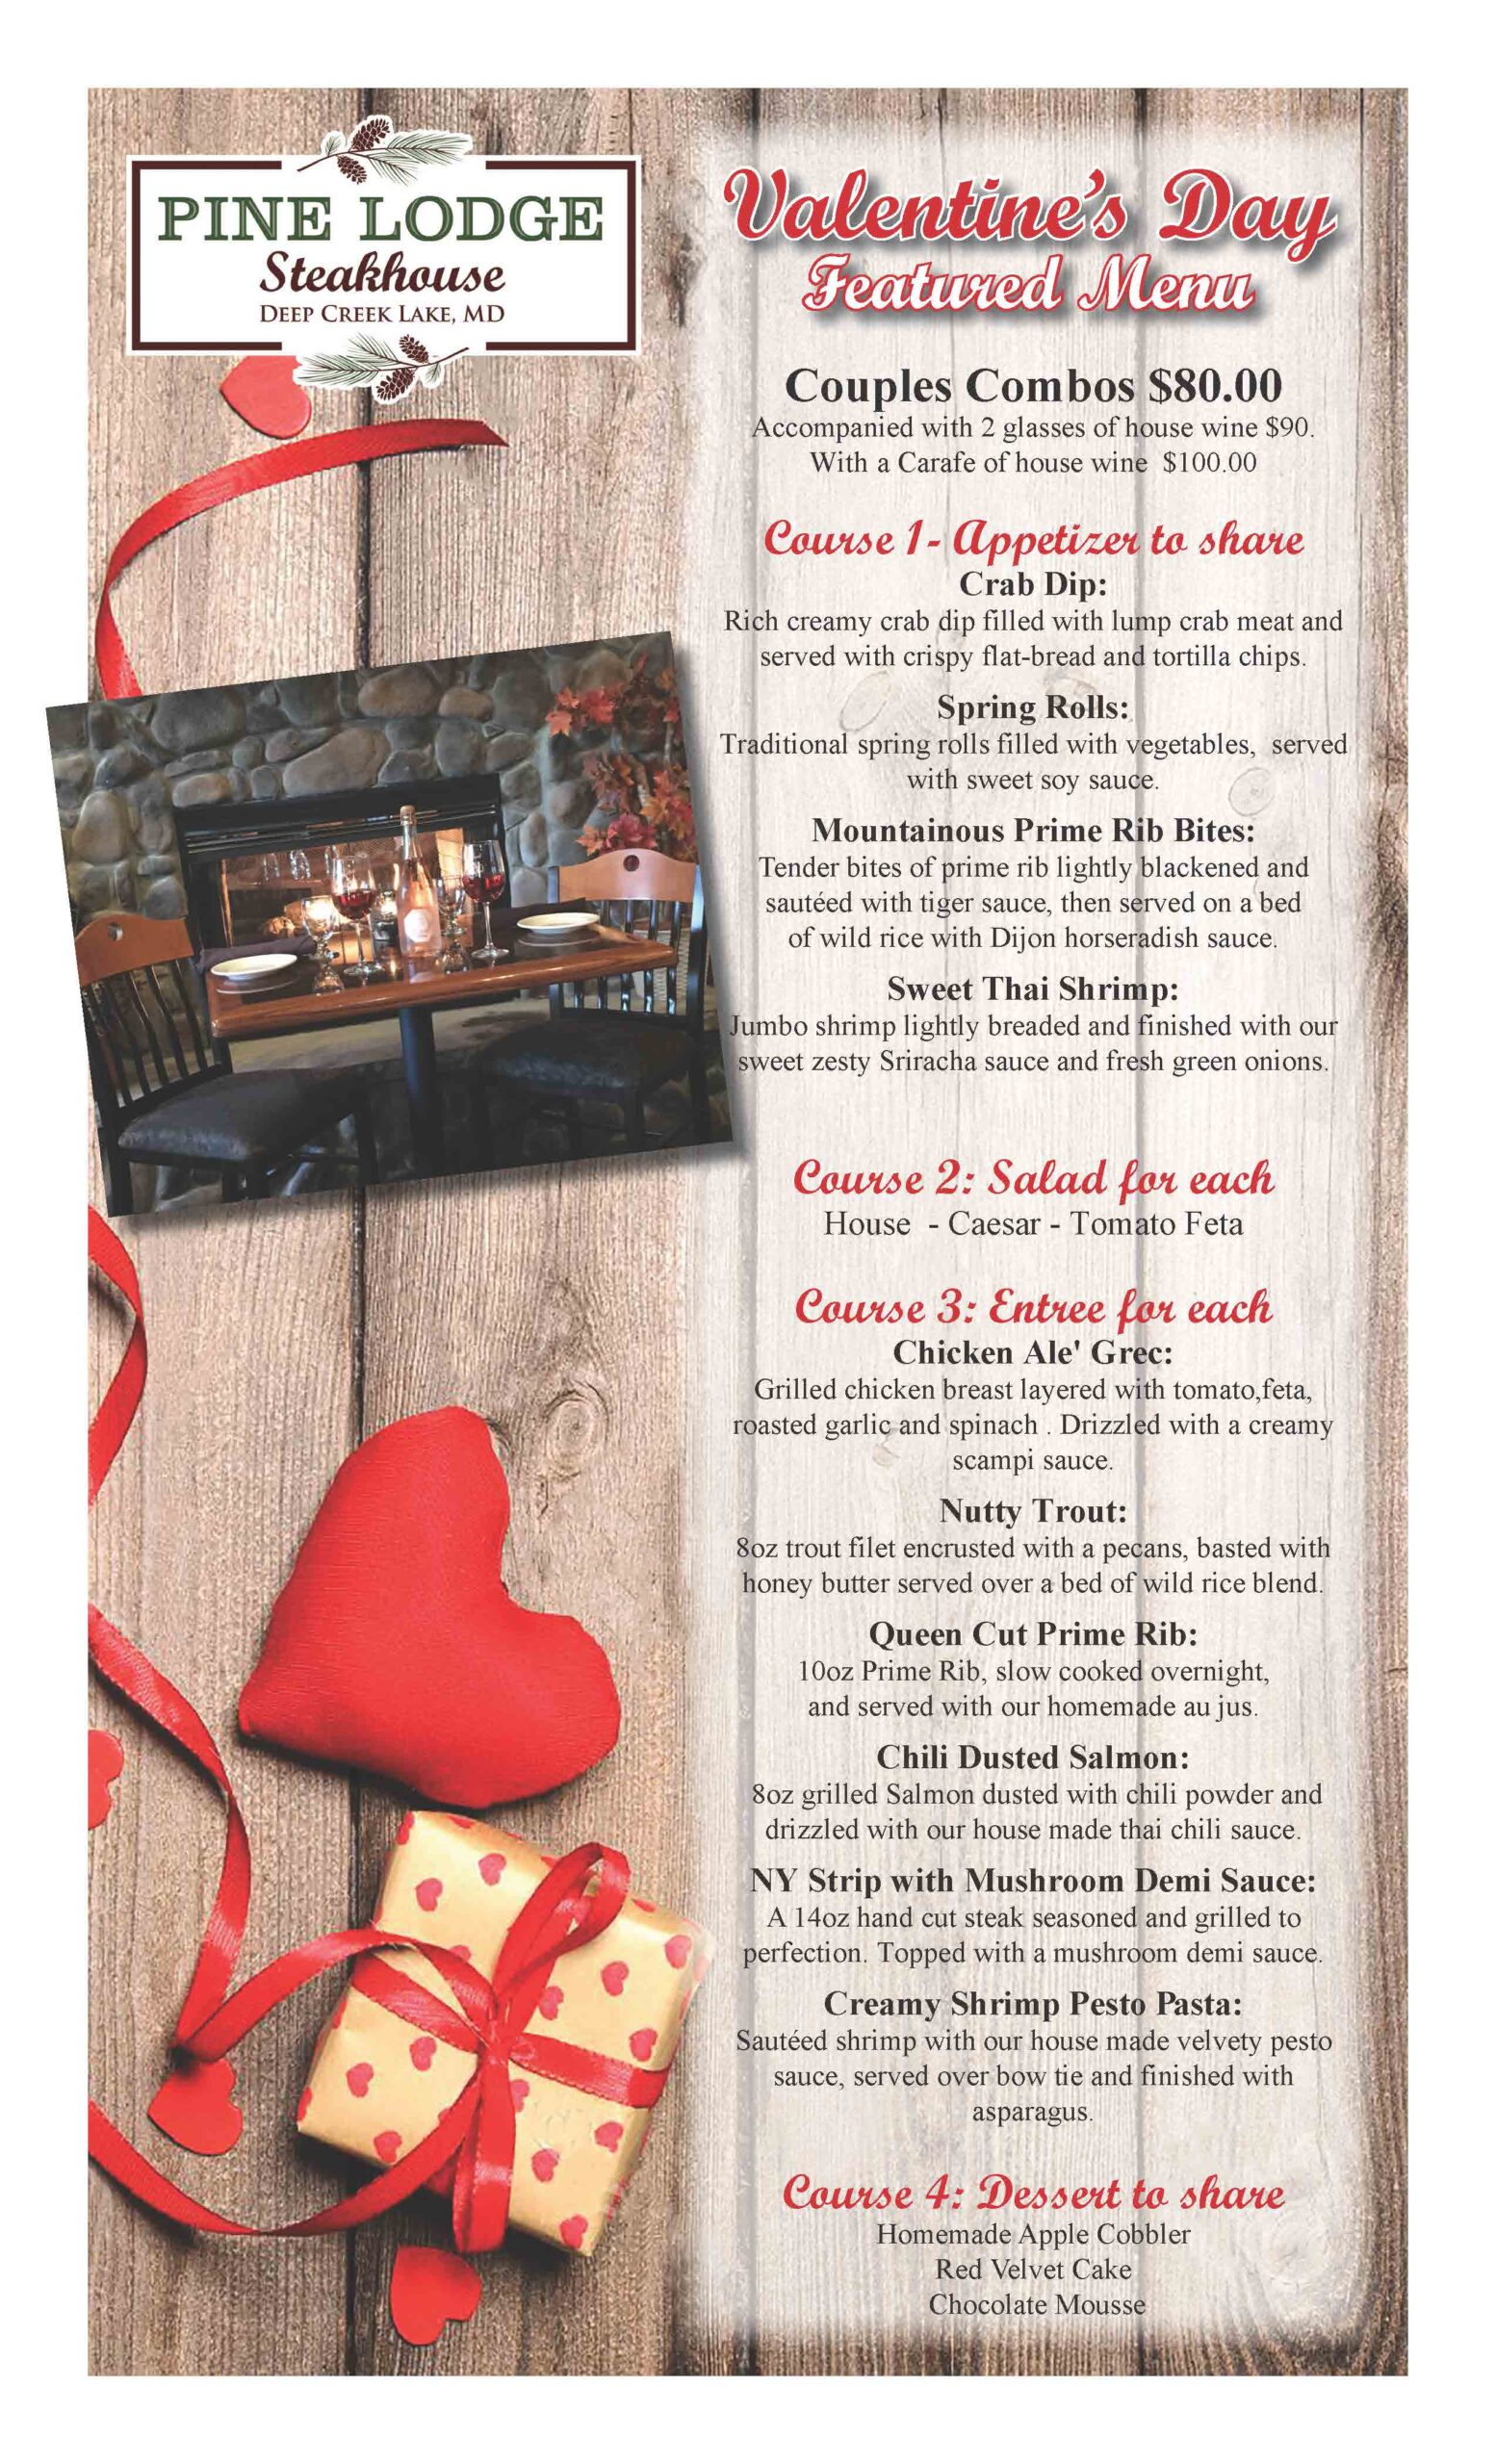 Pine Lodge Steakhouse Valentine's Day Menu